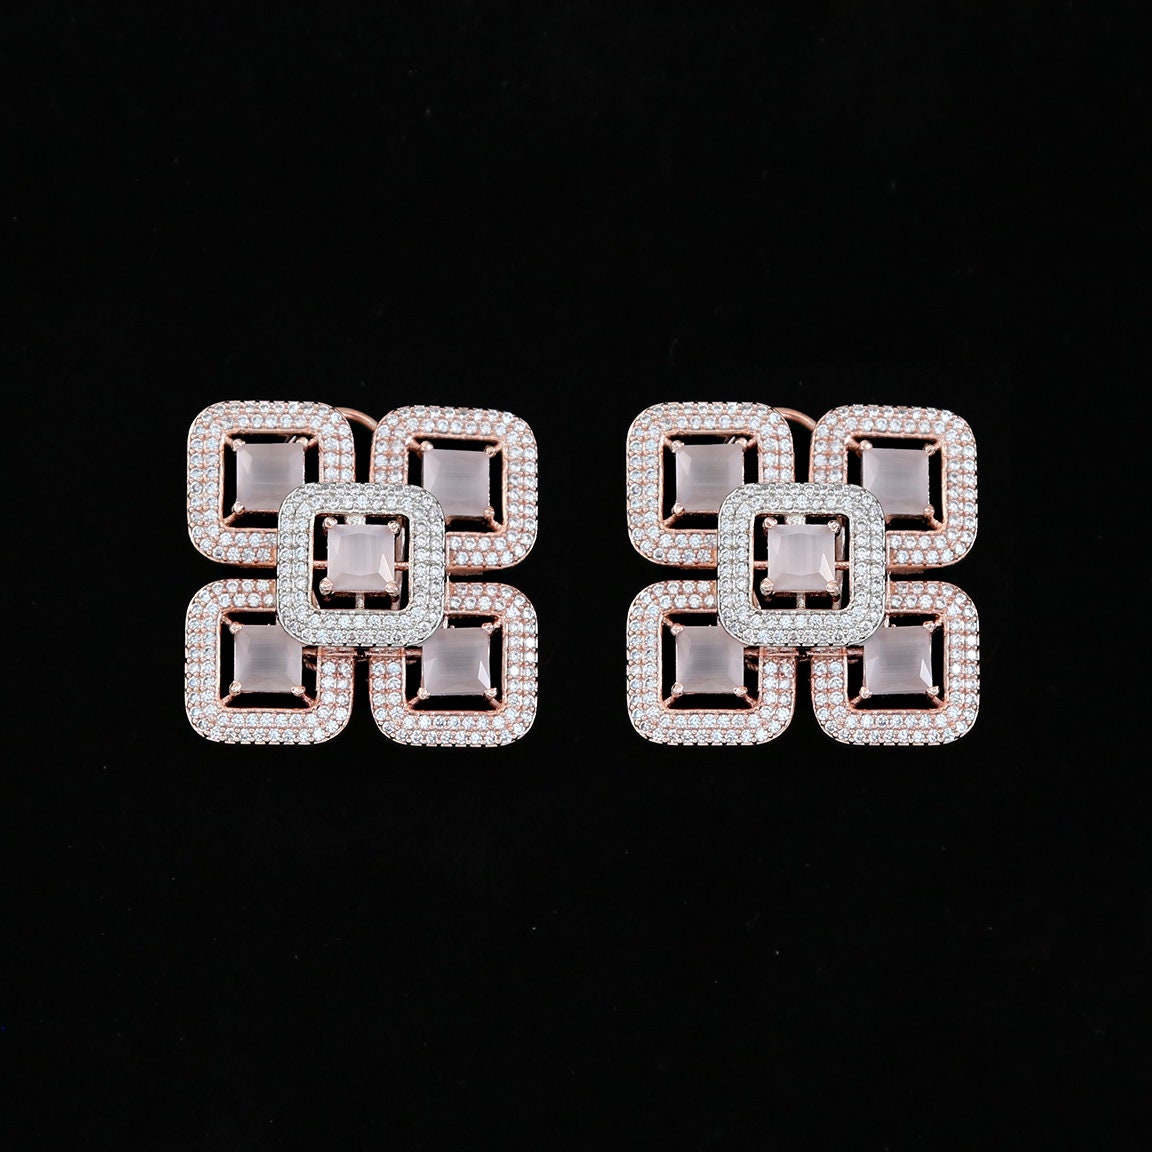 Stud earrings for women | Geometric square cluster stud earrings in rose-gold Finish |Big Indian Ruby stud earrings designs |Dual Tone Studs